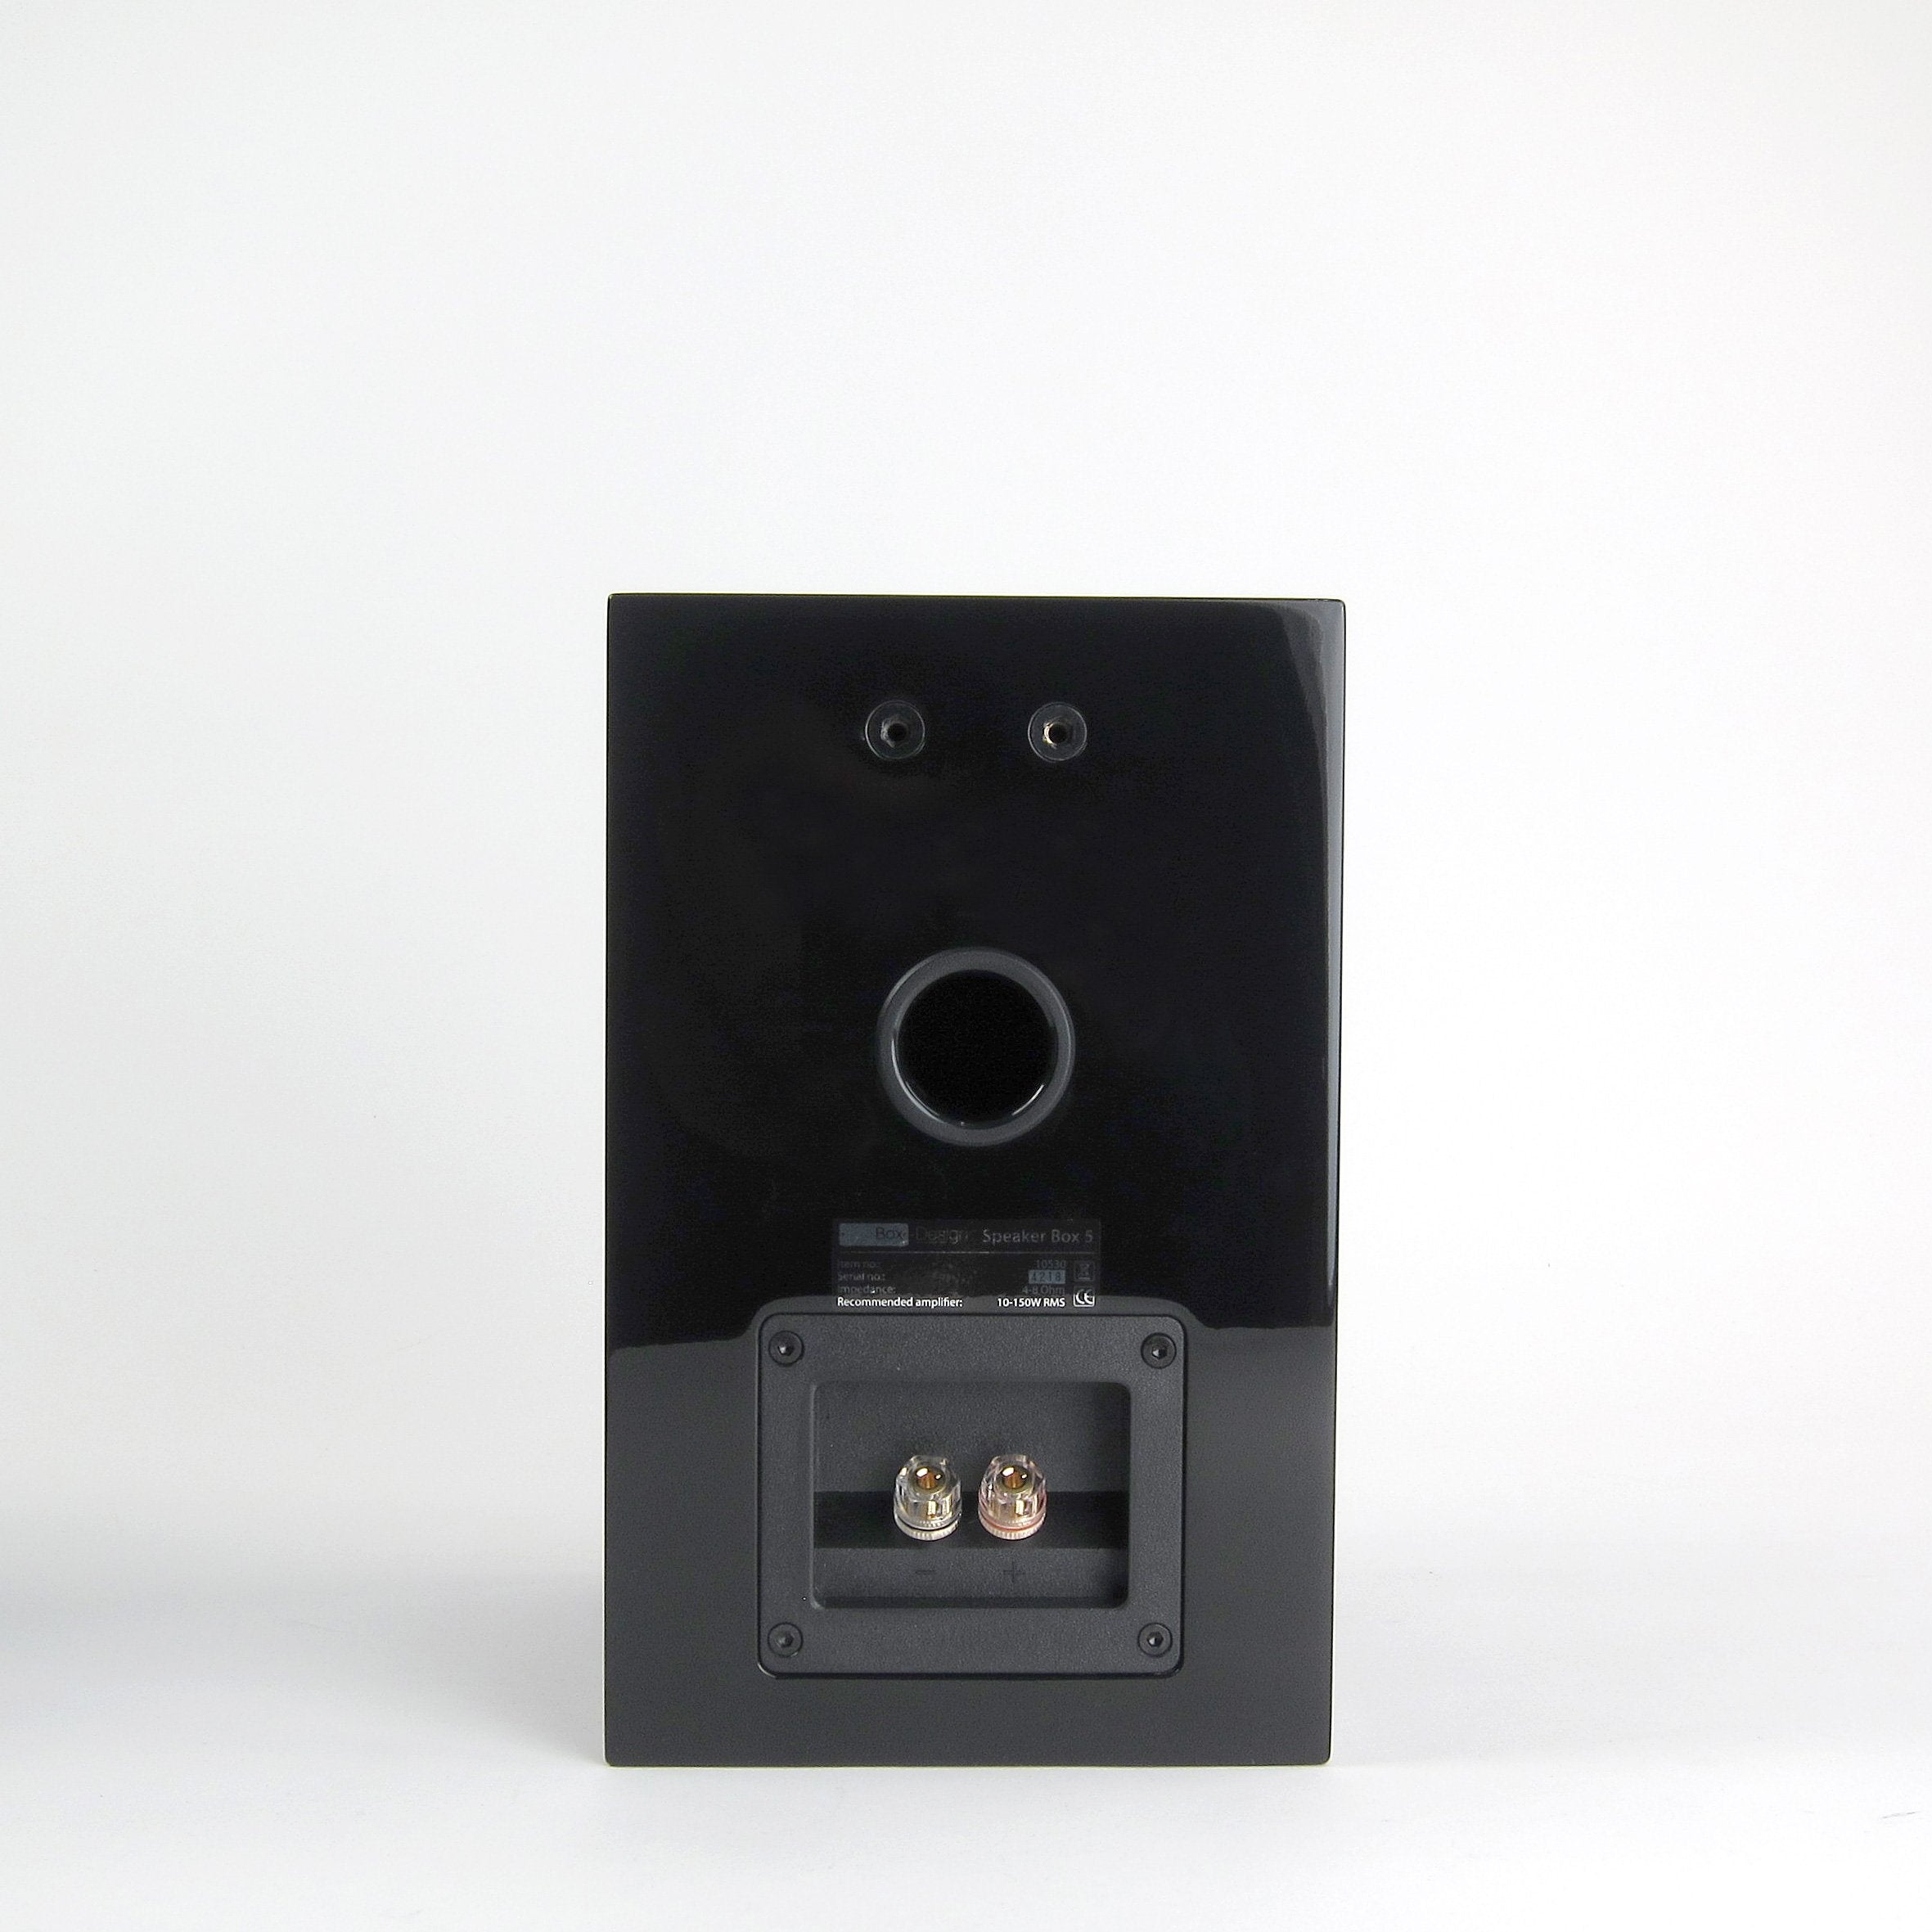 Pro-Ject: Speaker Box 5 Passive Speakers (Pair) - Black